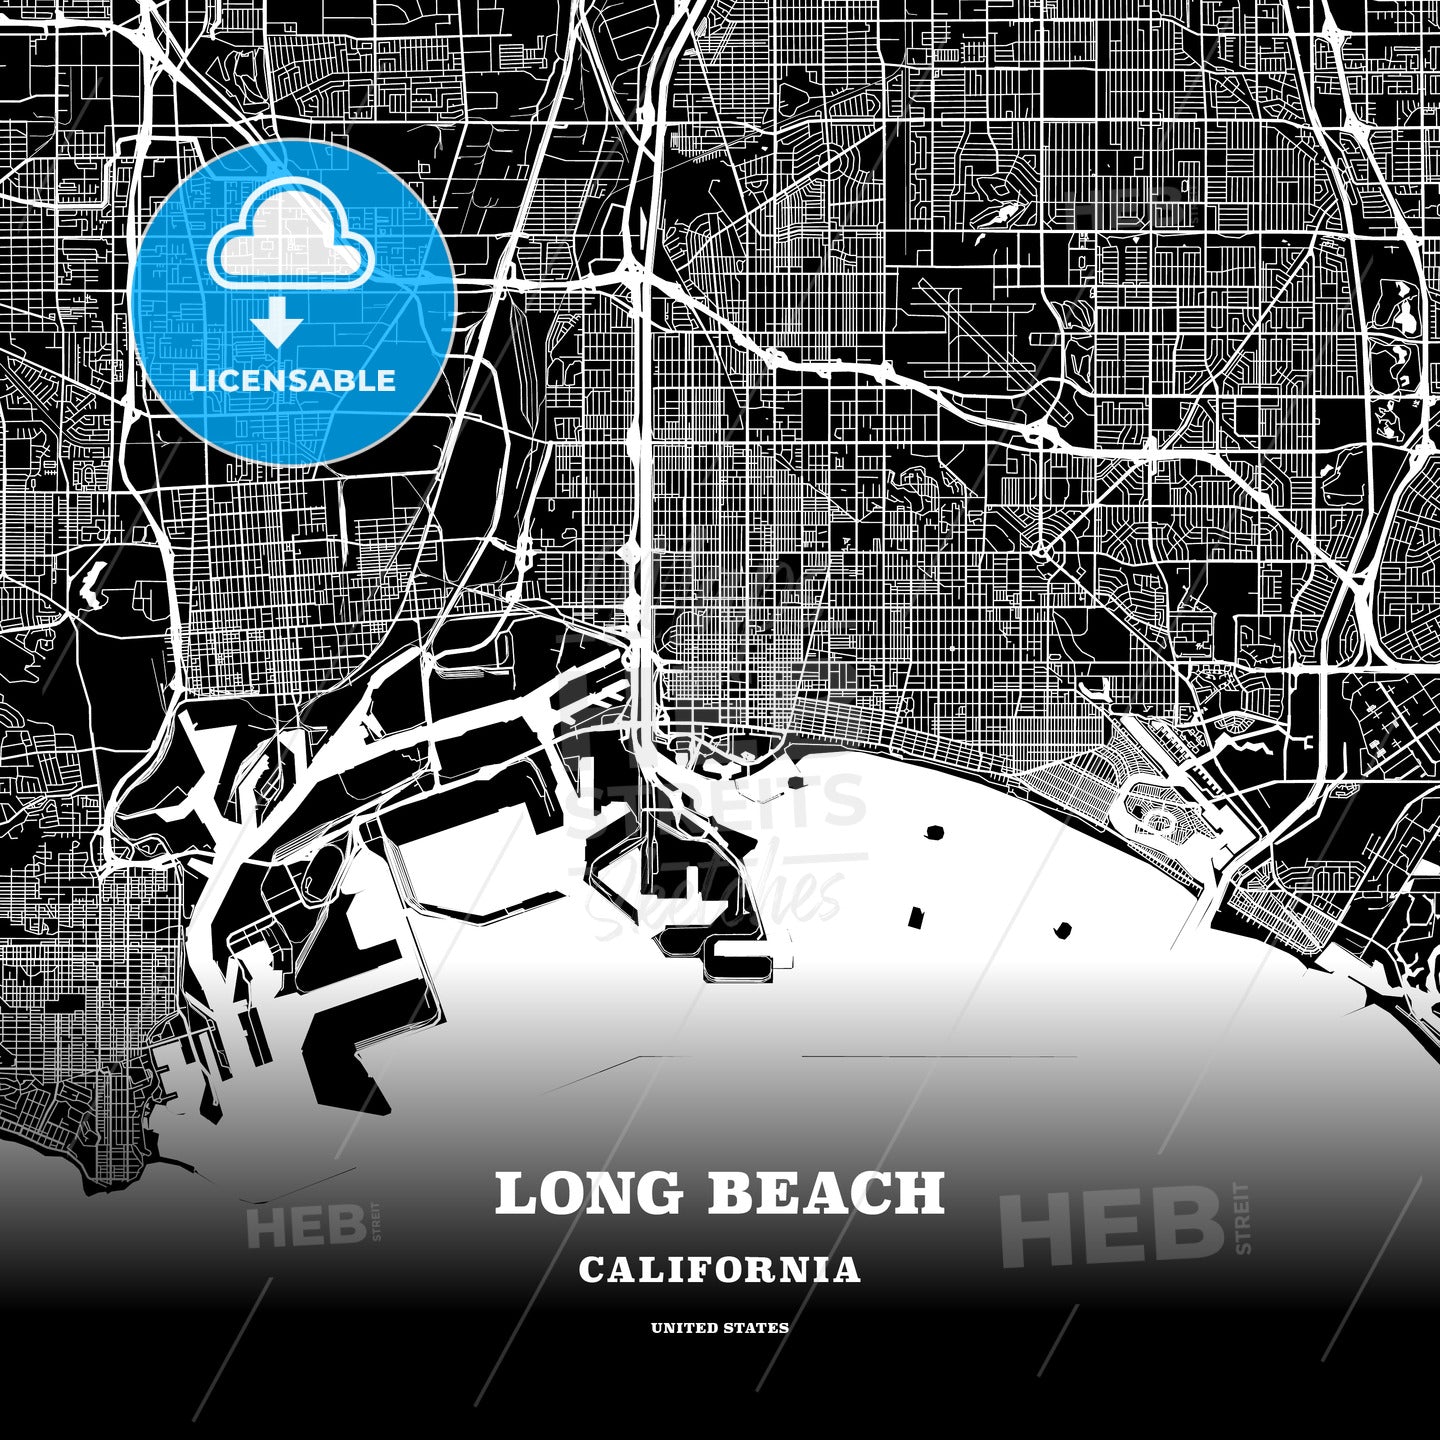 Long Beach, California, USA map